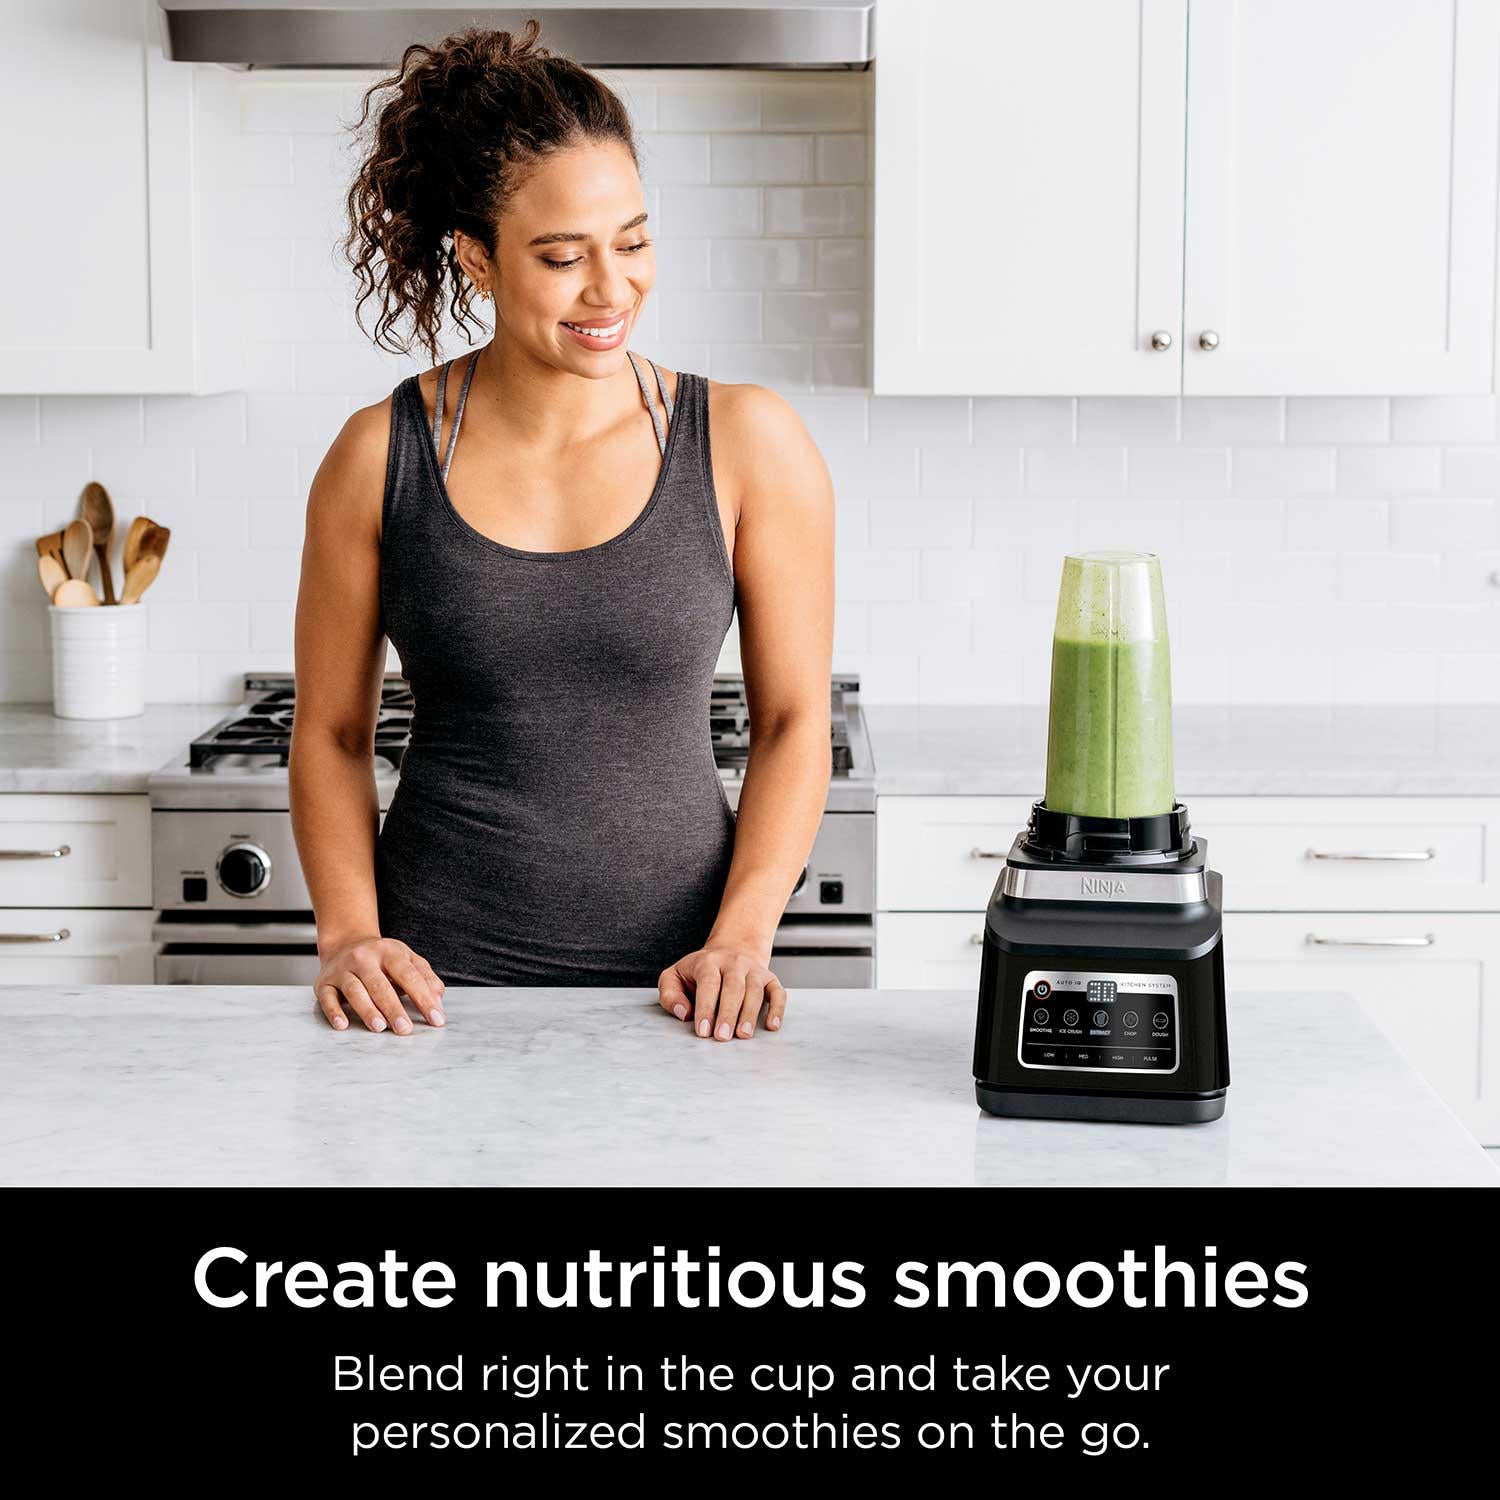 Ninja Professional Plus Kitchen Blender System and 8-Cup Food Processor